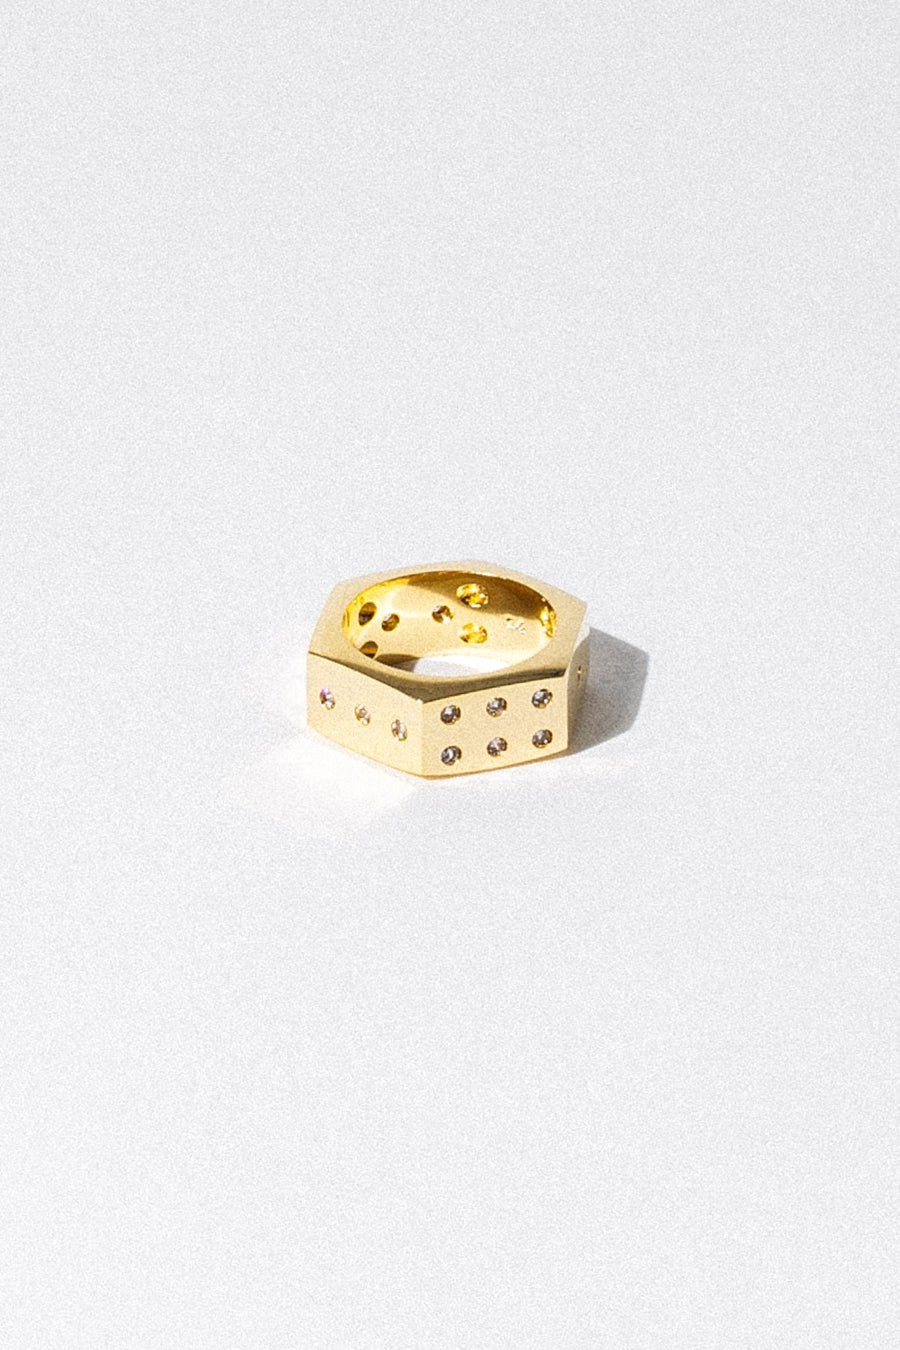 Dona Italia Jewelry Gold / US 6 Lucky Ace Unisex Ring